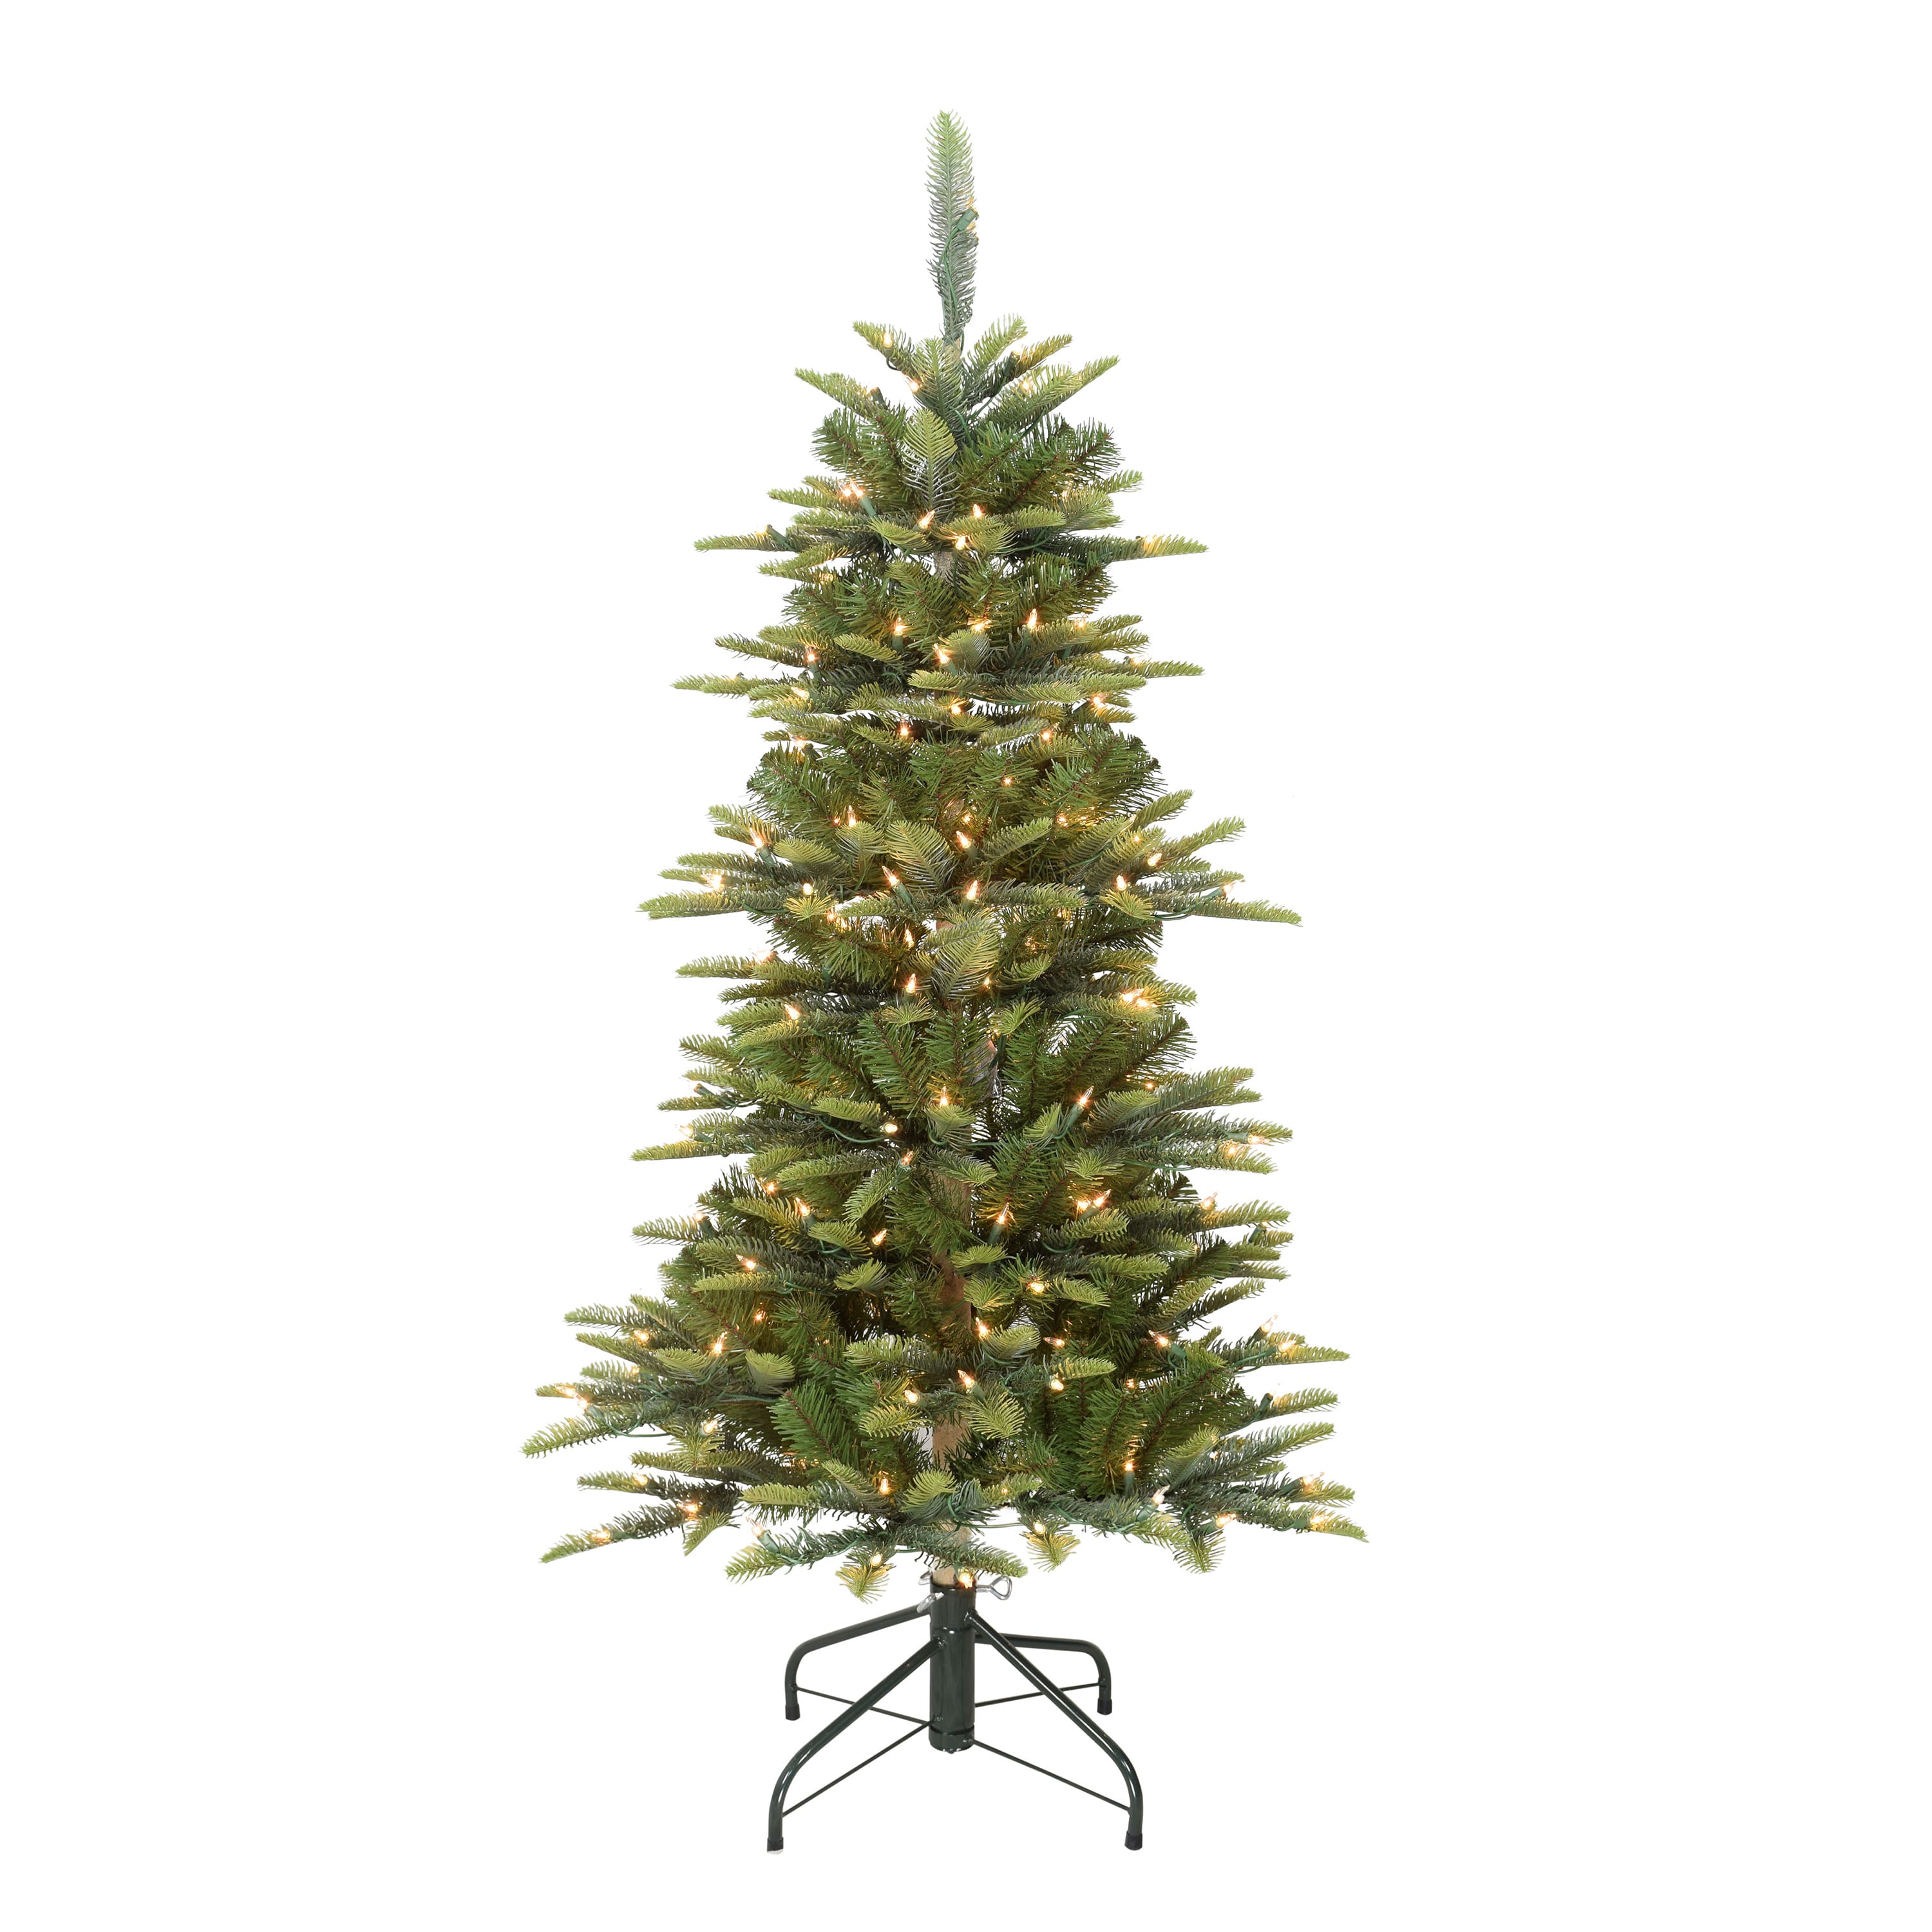 6 Pack: 4.5ft. Pre-Lit Slim Aspen Fir Artificial Christmas Tree with 200 Lights, Green